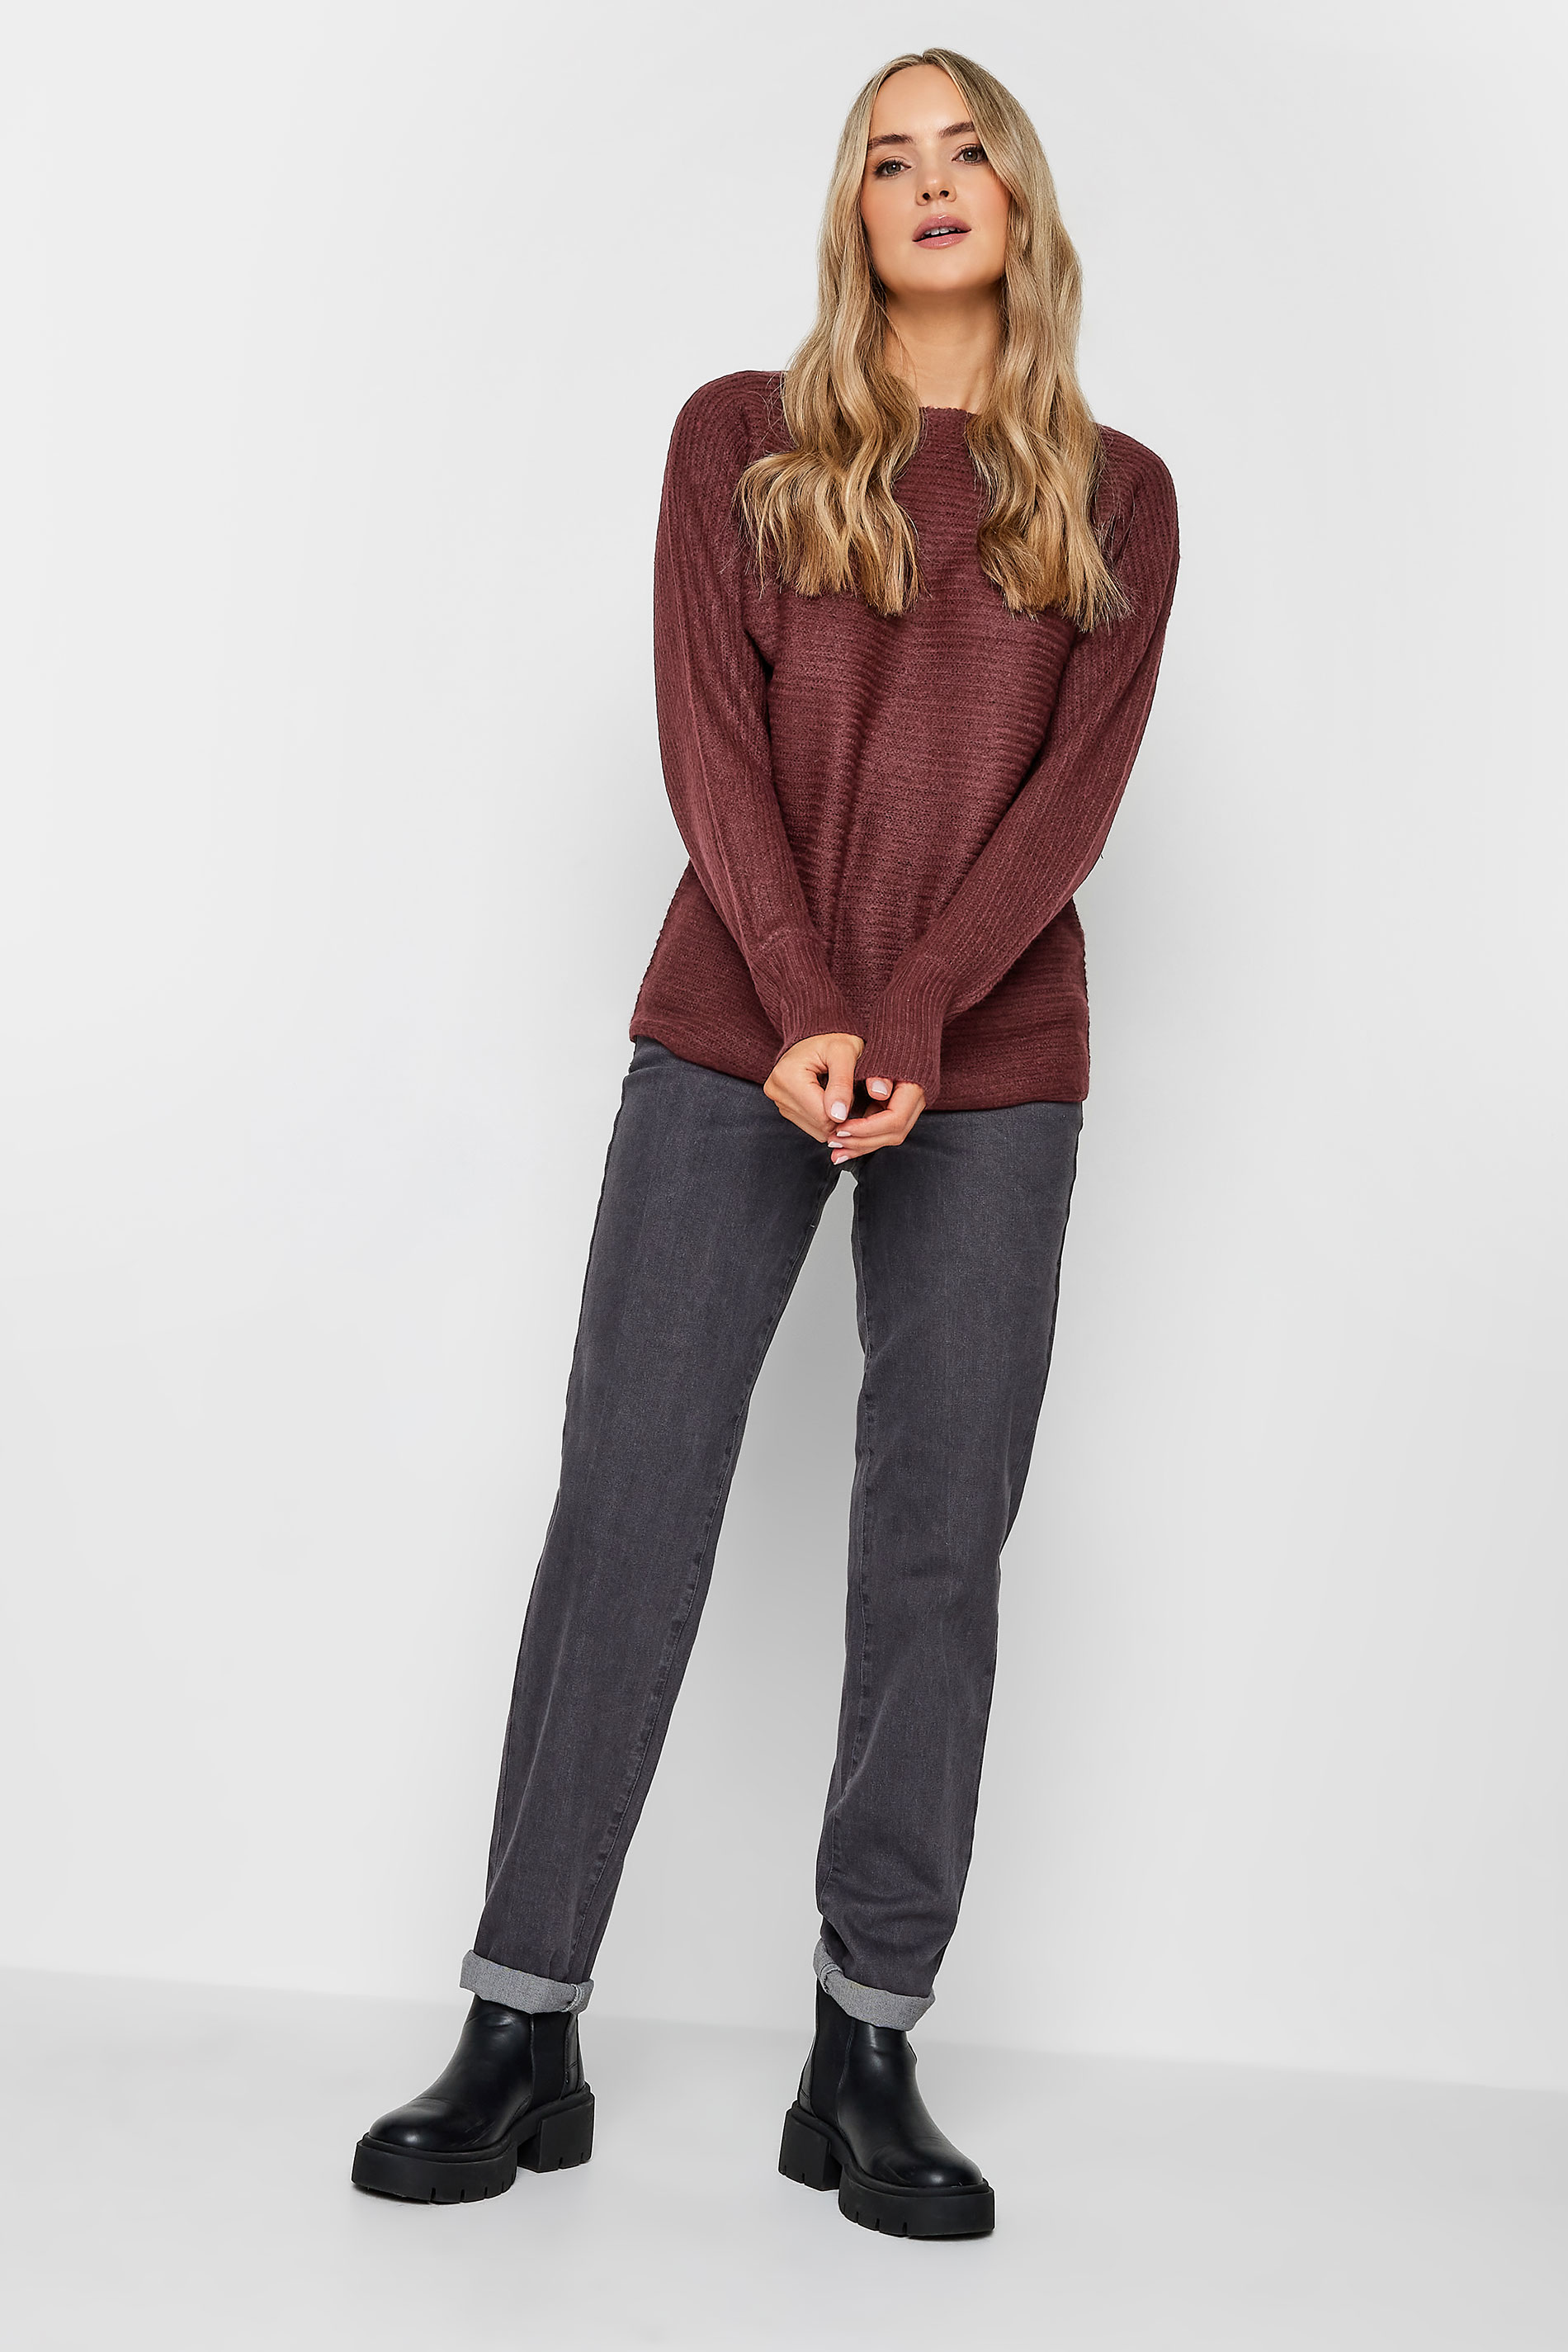 LTS Tall Womens Grey Long Sleeve Knit Jumper | Long Tall Sally  2